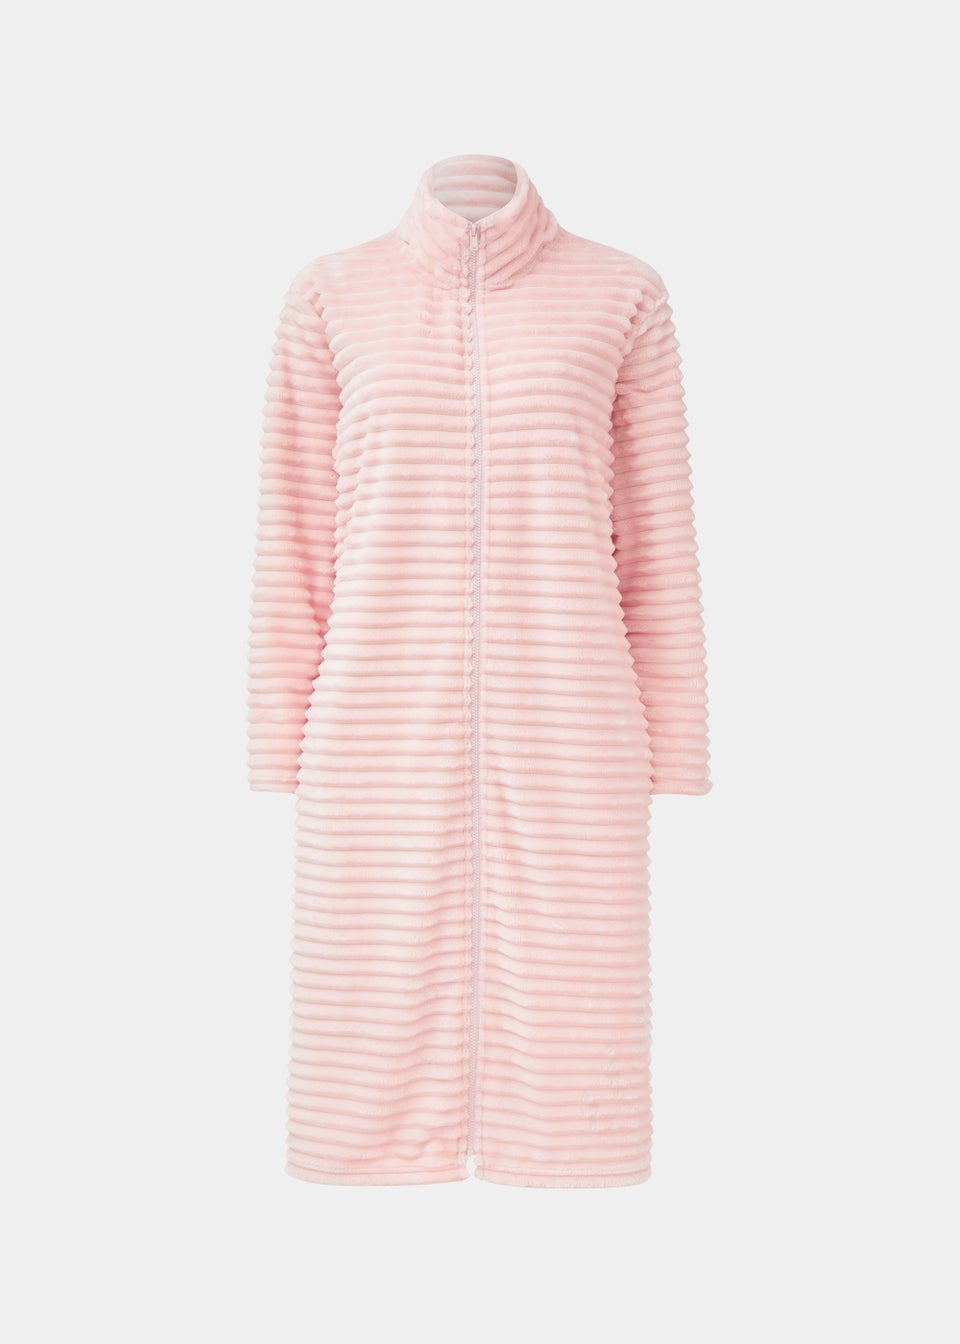 Women's Wicked Plush Robe, Full-Zip | Robes at L.L.Bean